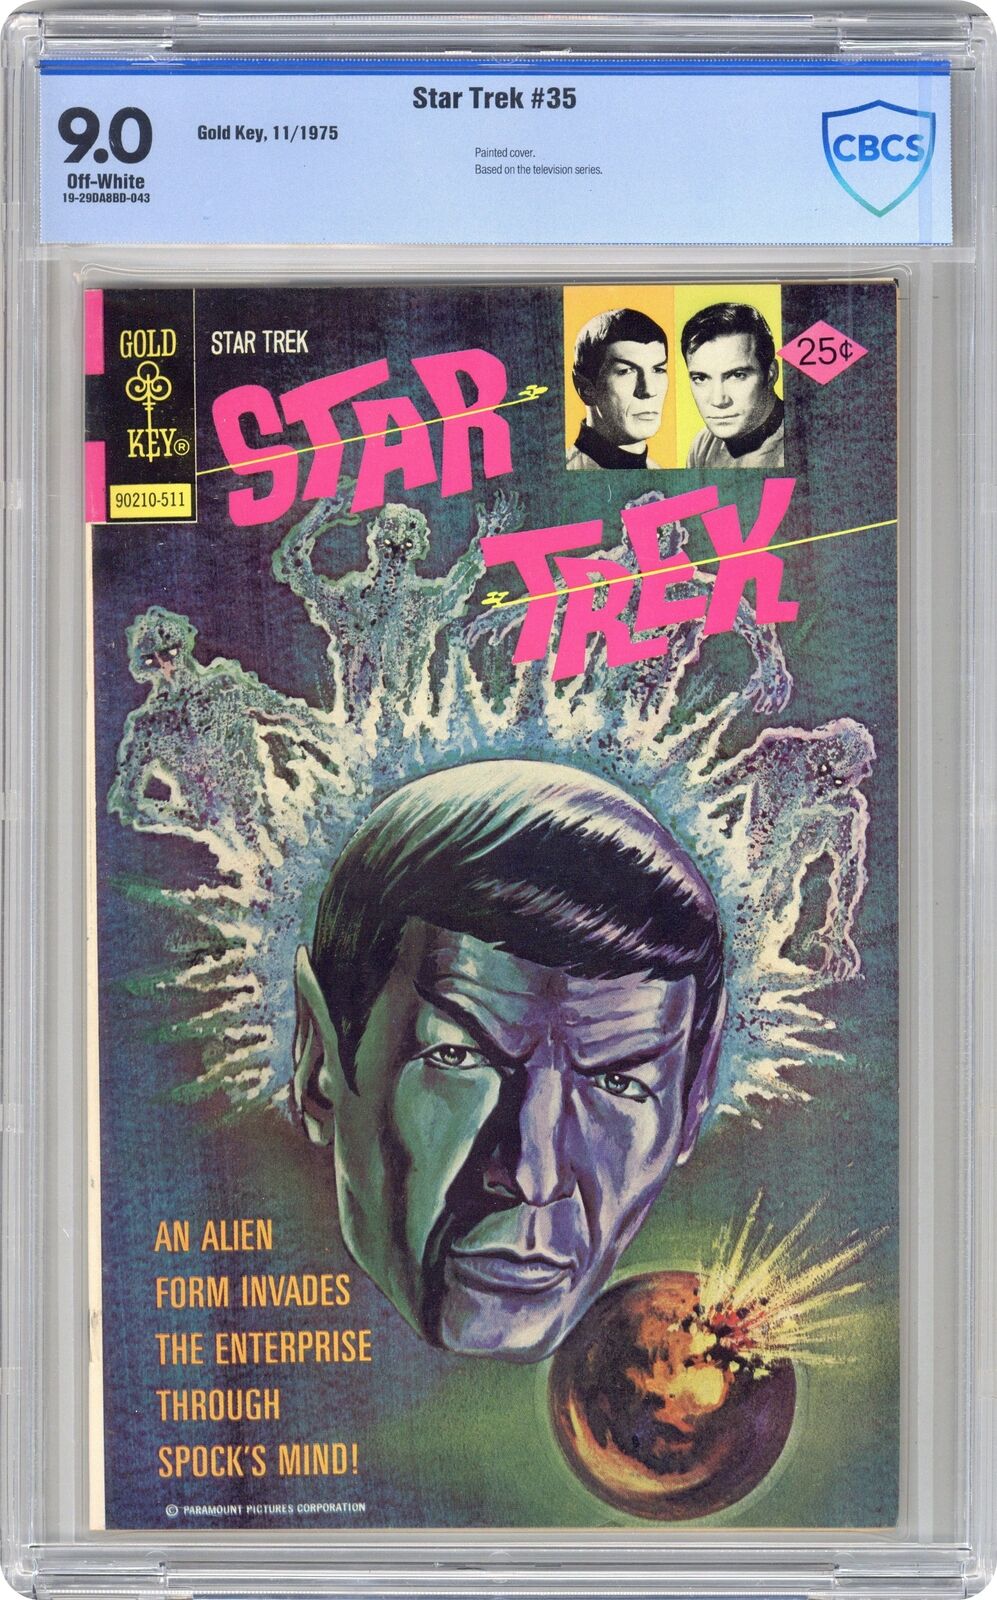 Star Trek #35 CBCS 9.0 1975 Gold Key 19-29DA8BD-043